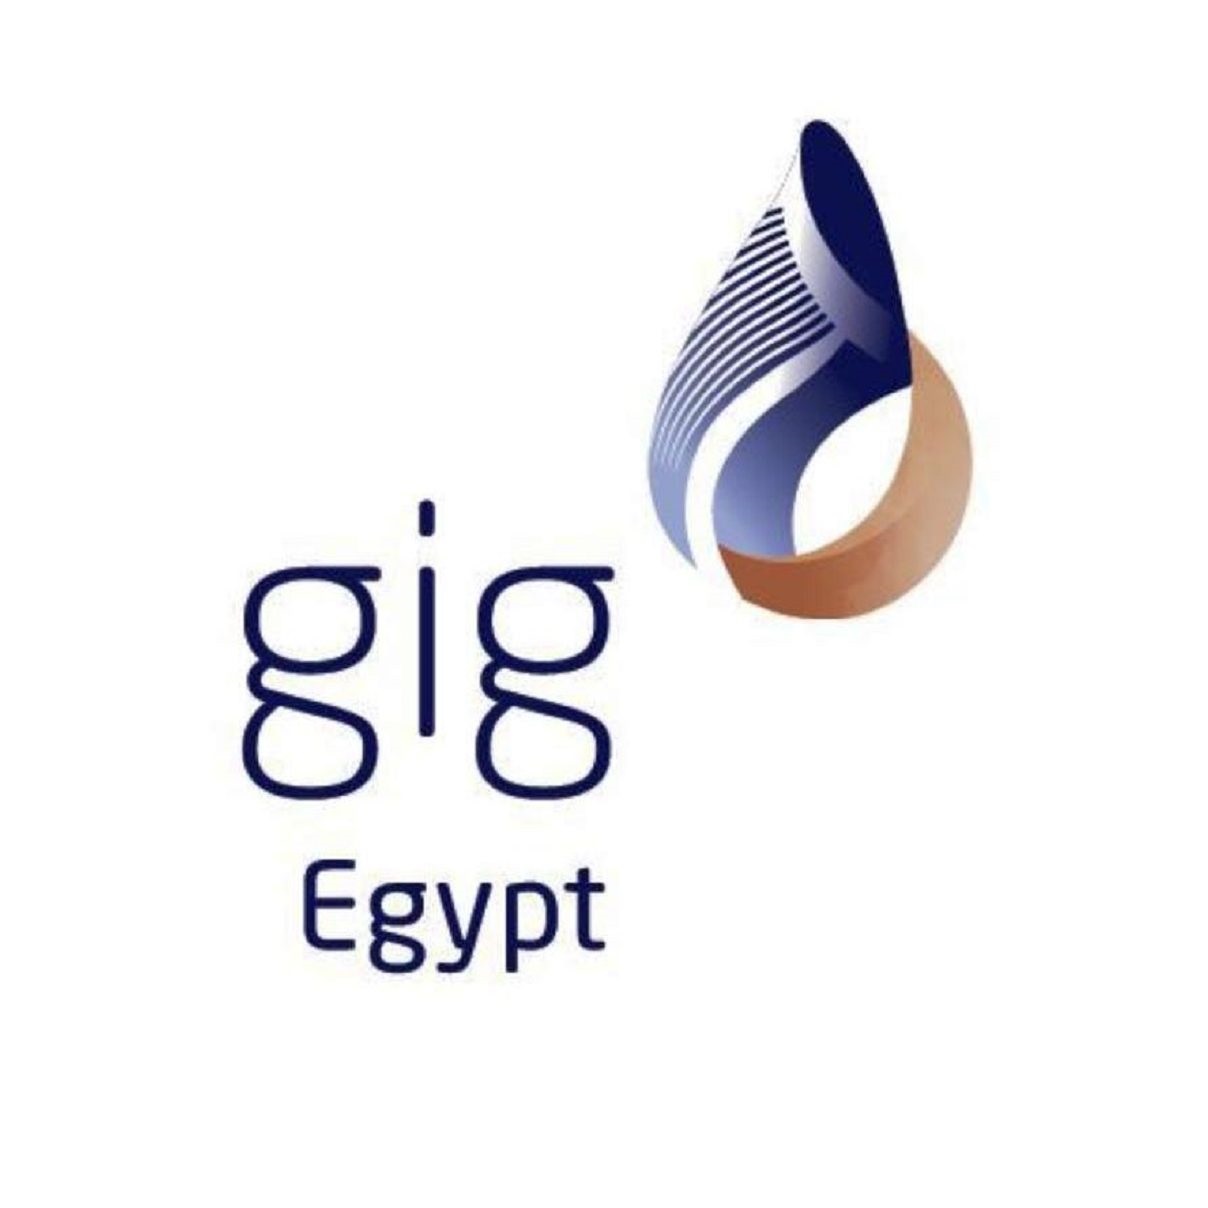 GIG Egypt